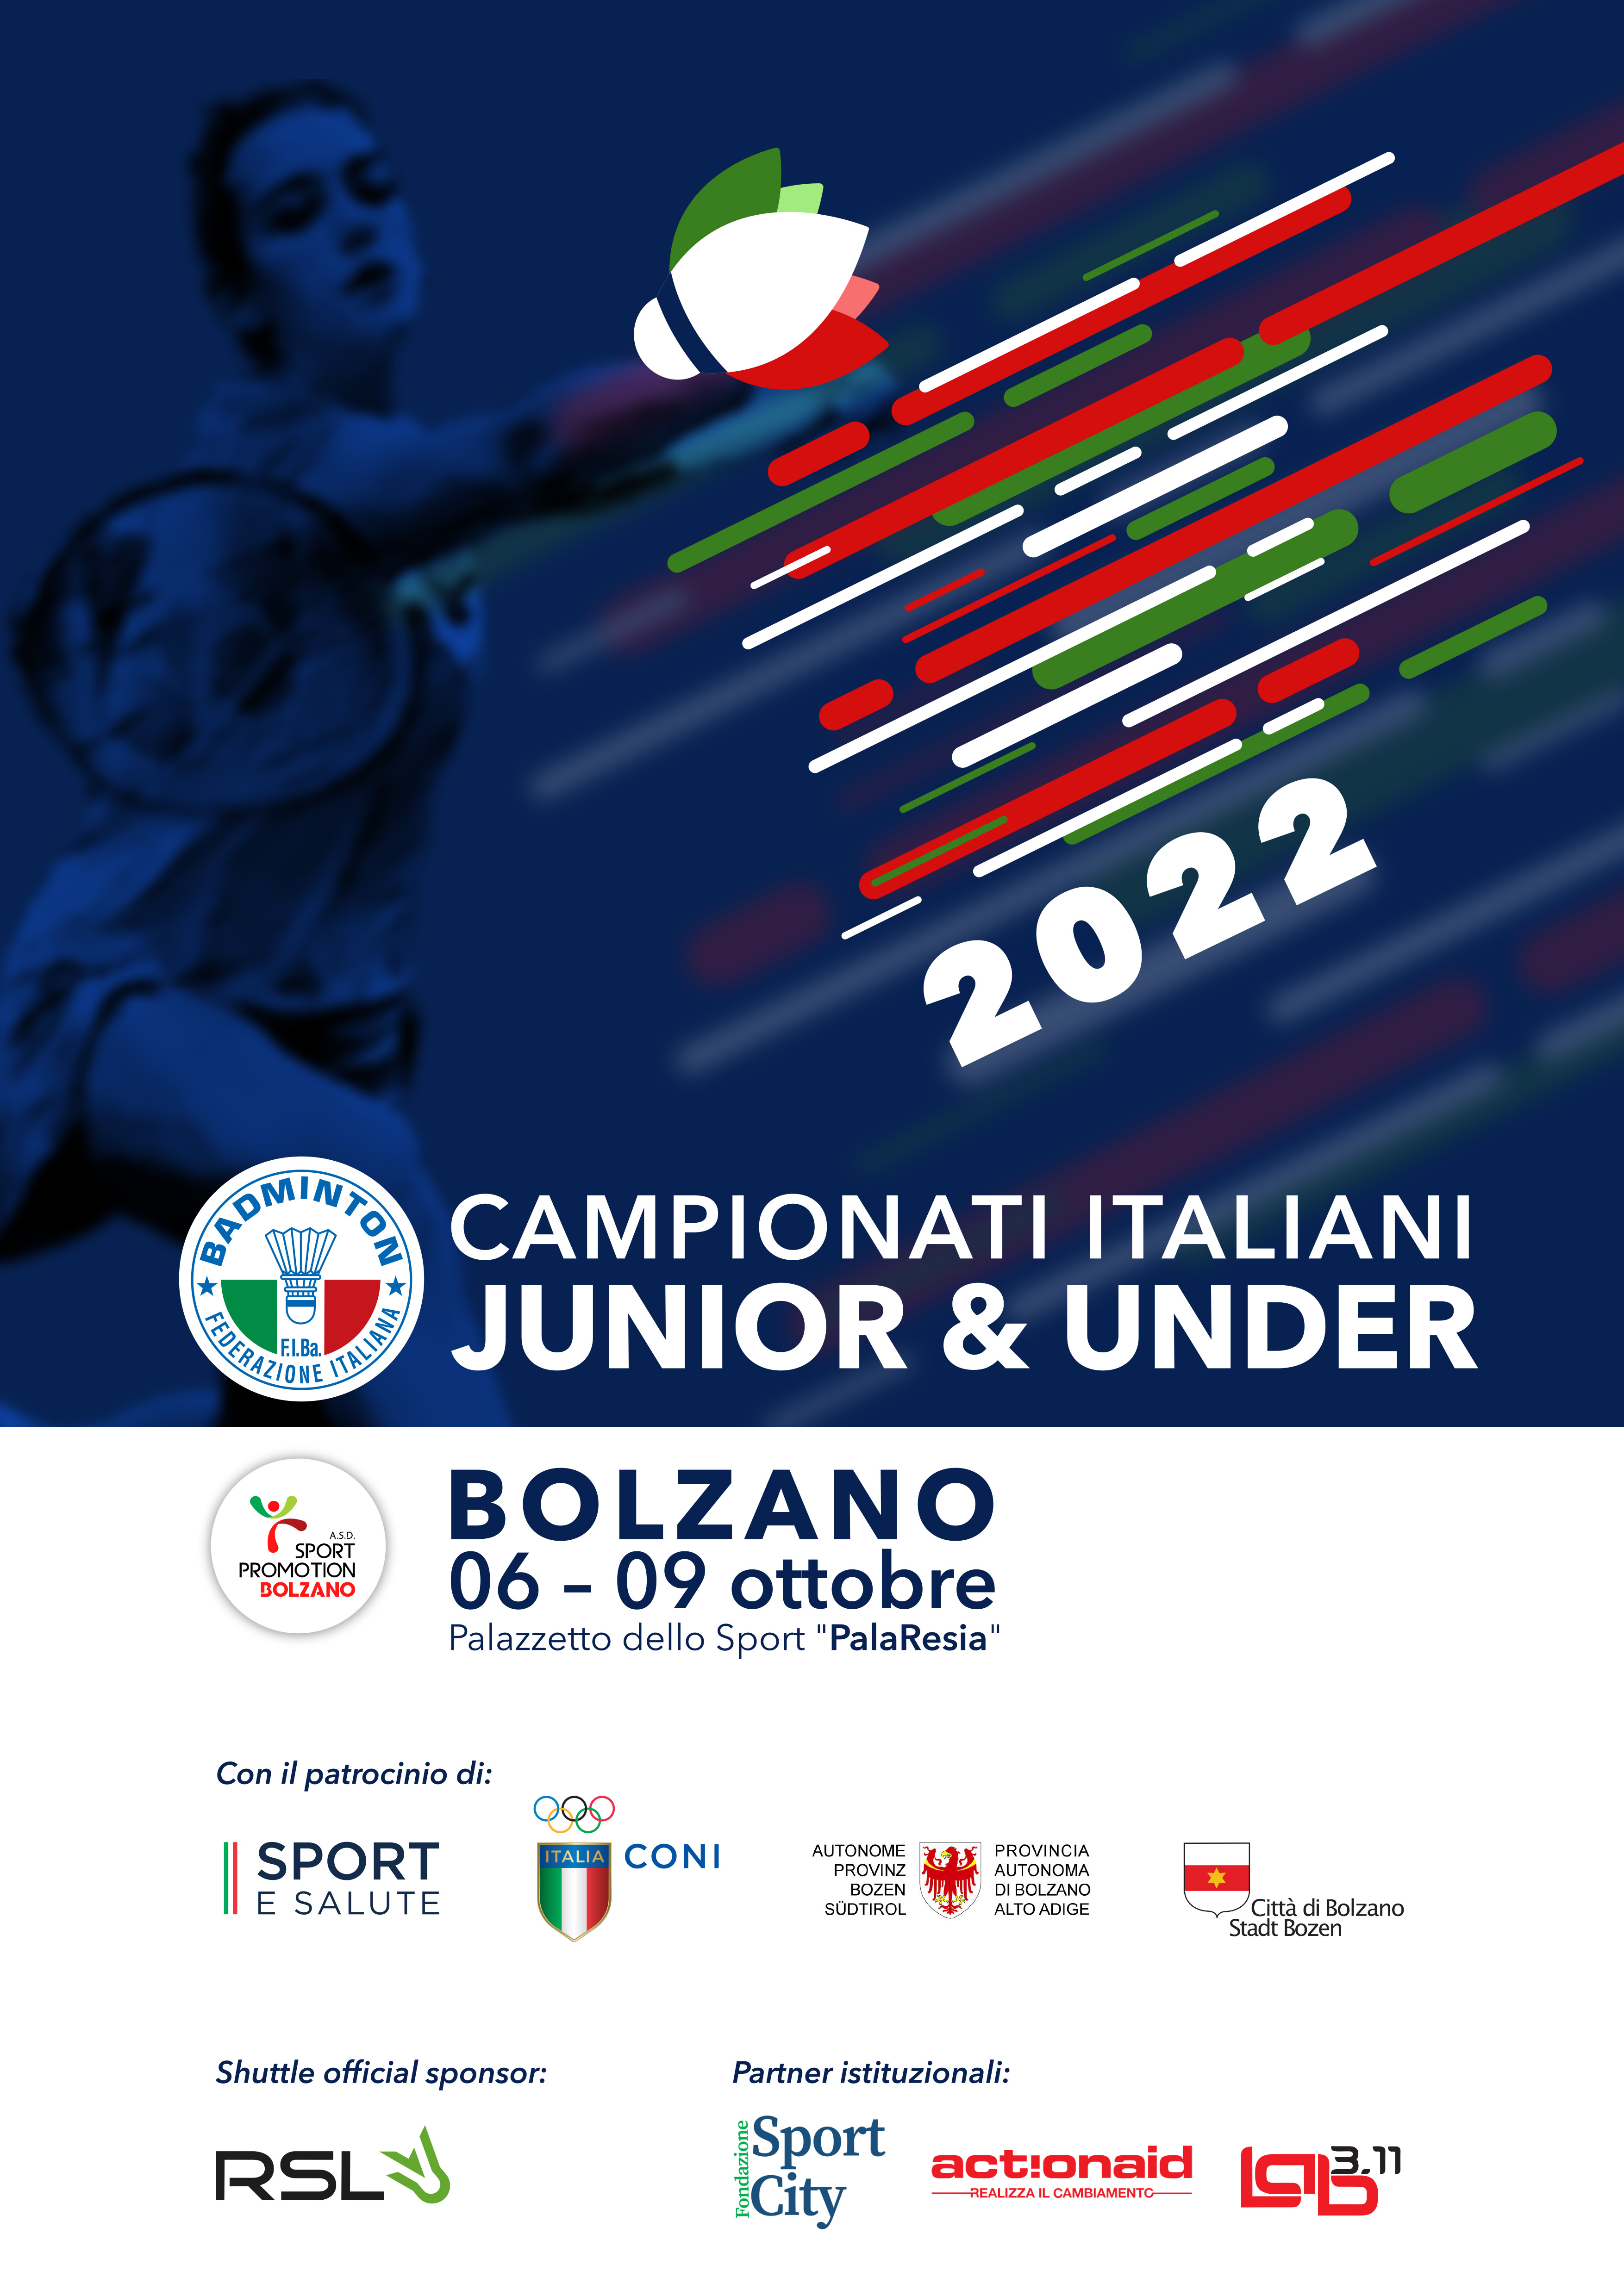 Manifesti Campionati Italiani Jun Und 2022 Final version